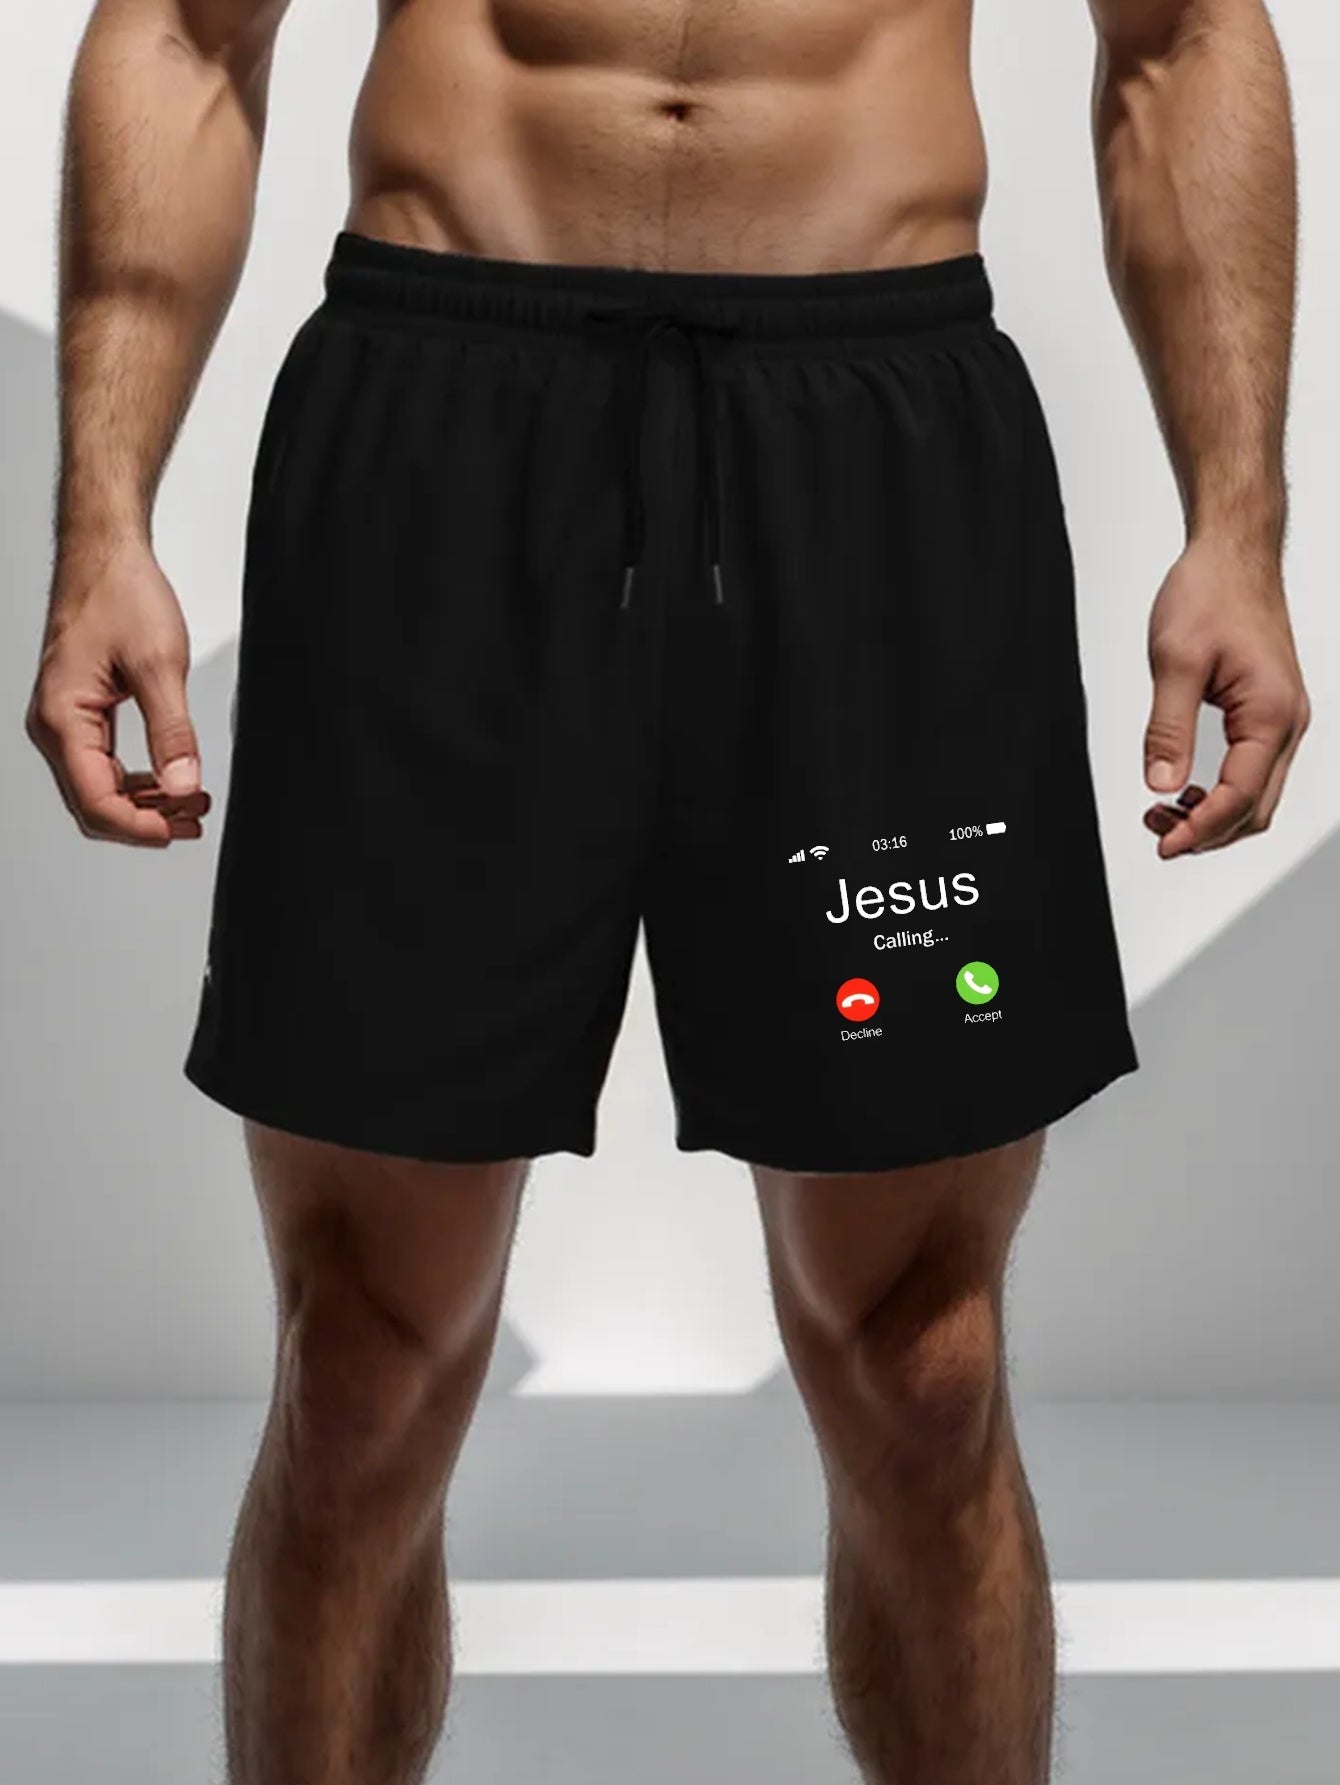 Jesus Is Calling Plus Size Men's Christian Shorts claimedbygoddesigns